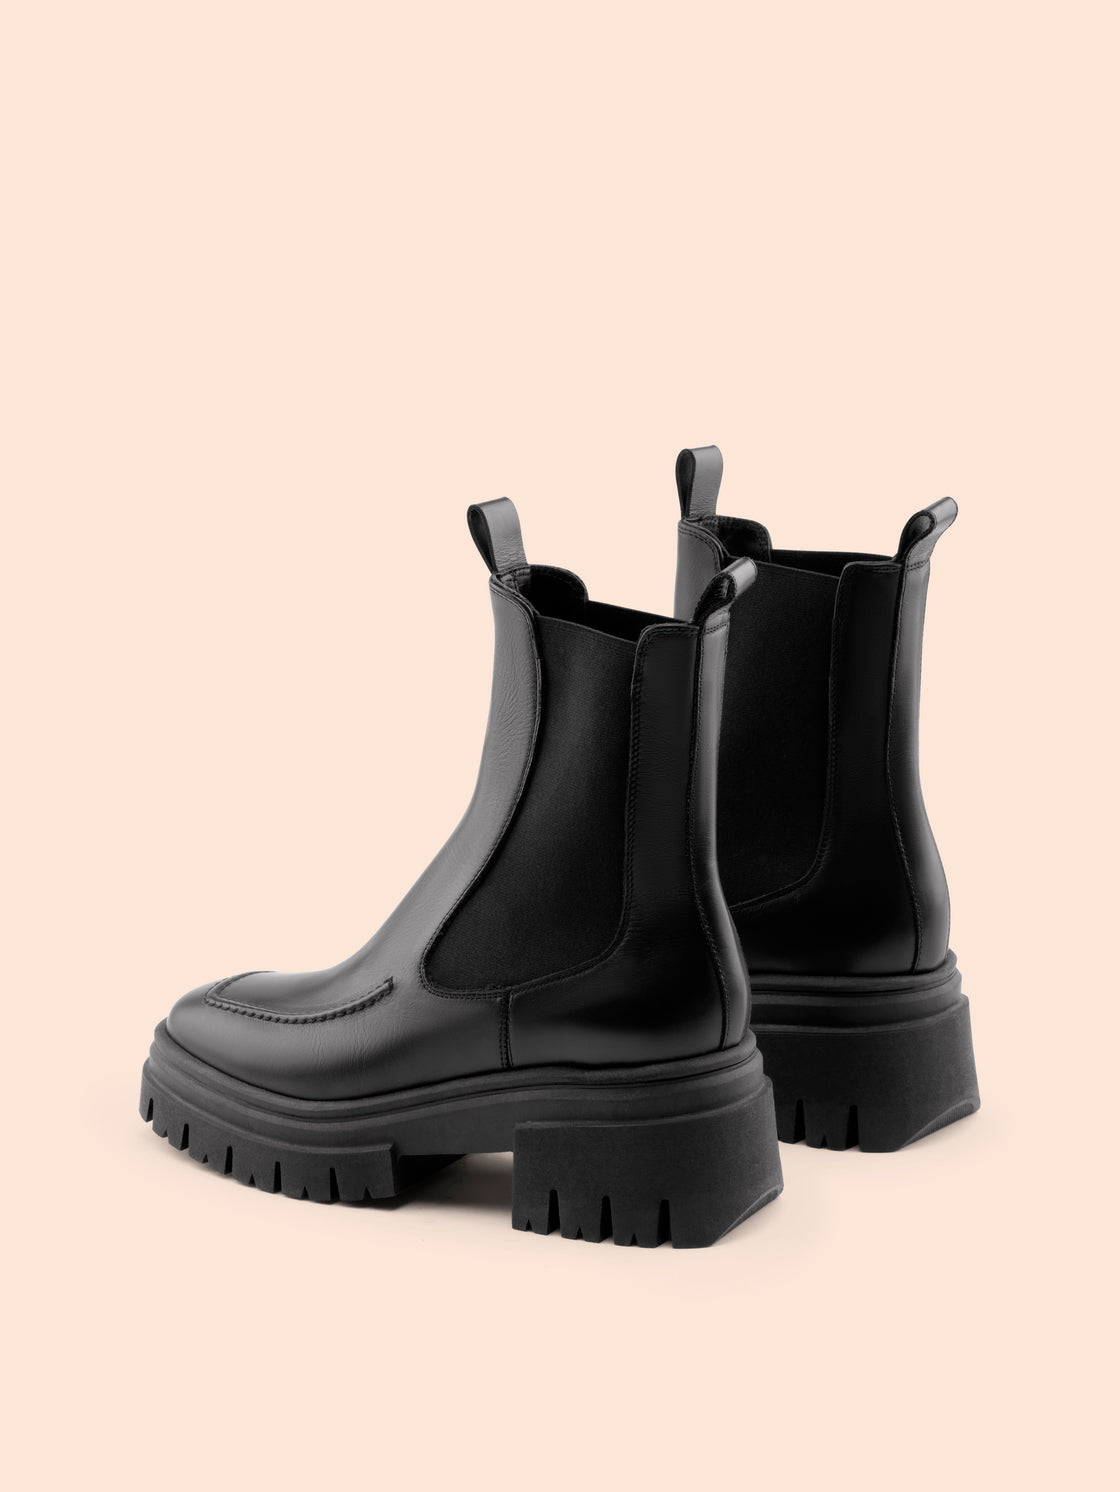 Maguire Biella Leather Chelsea Boots - Black